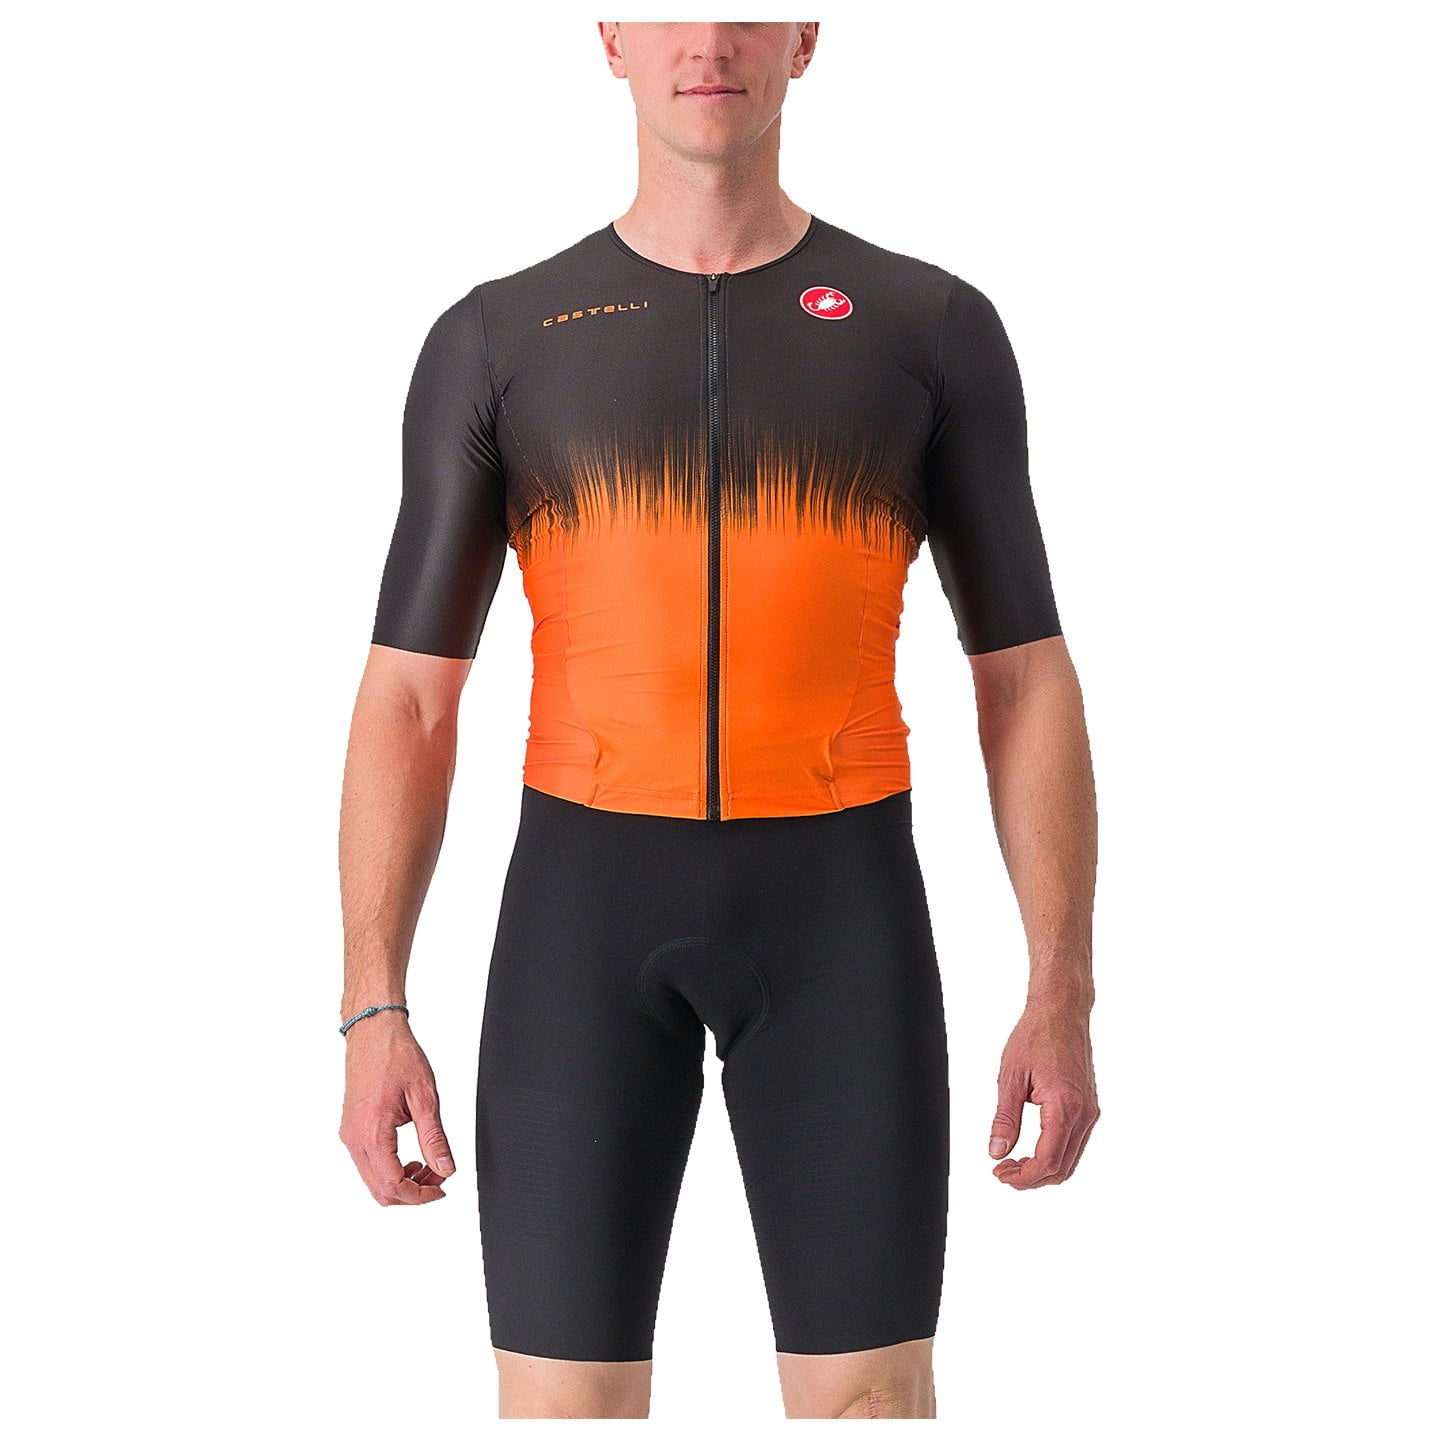 CASTELLI Sanremo Ultra Tri Suit Tri Suit, for men, size M, Triathlon suit, Triathlon clothes